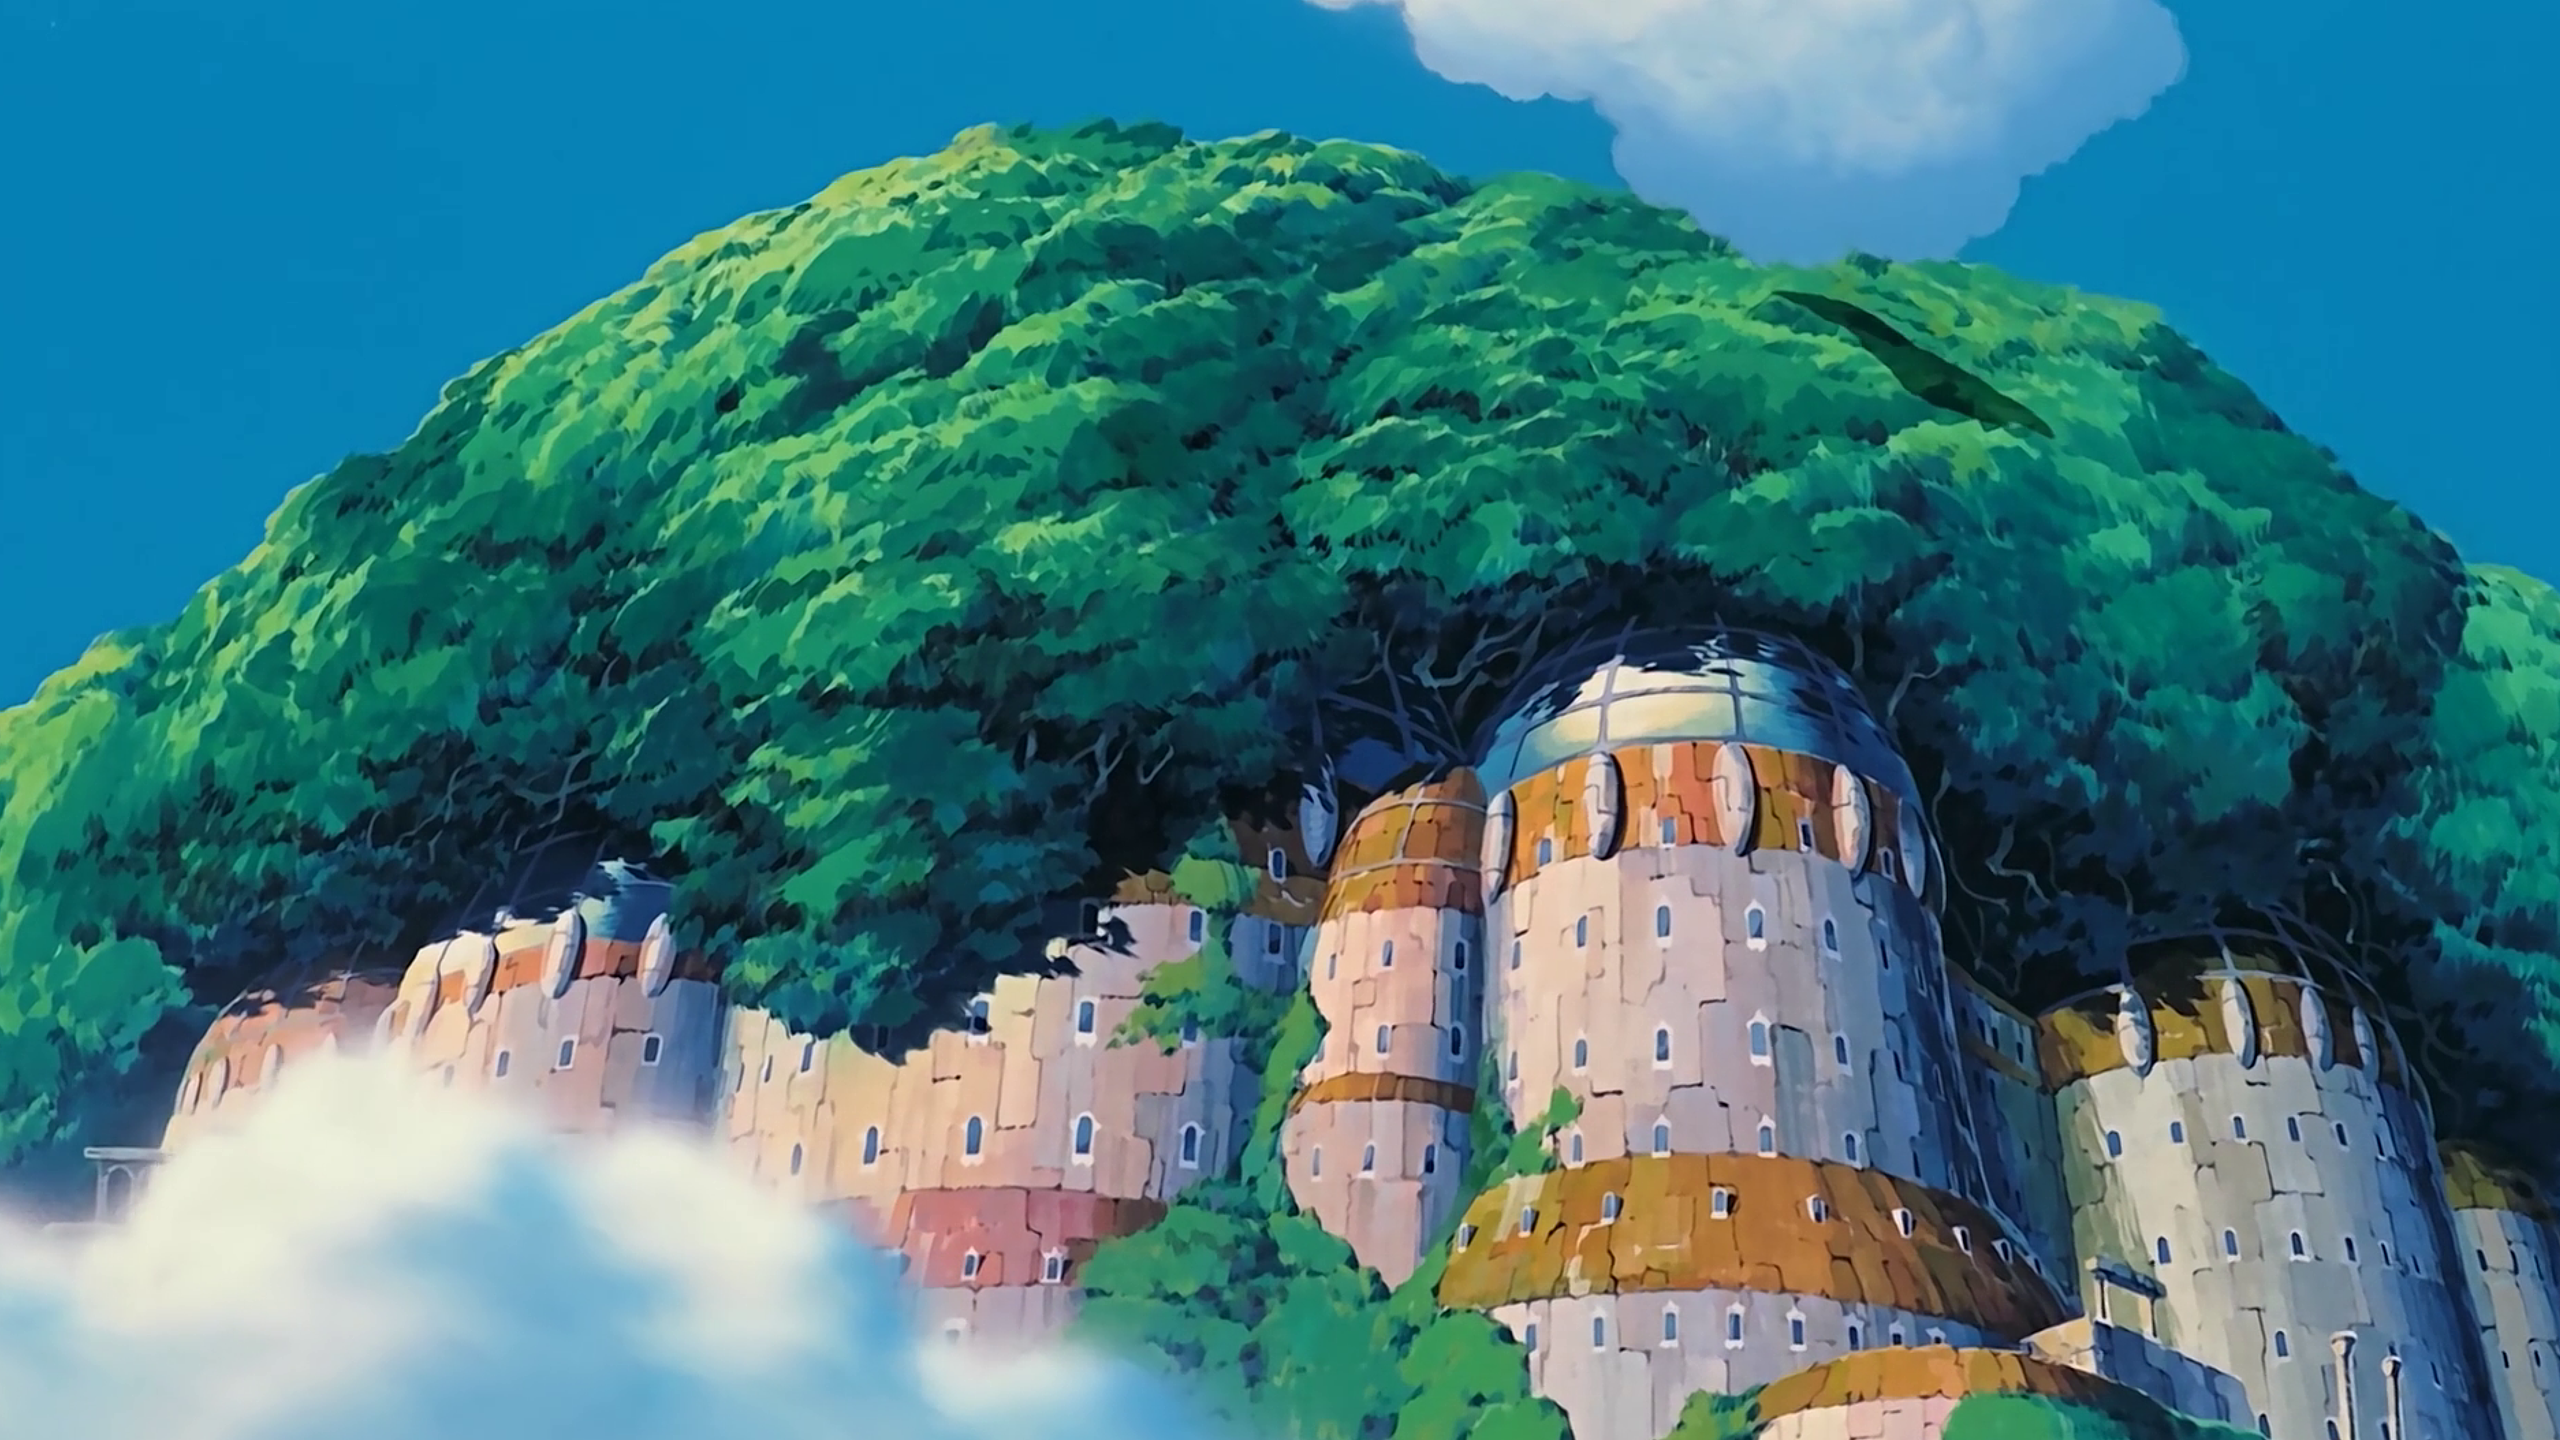 The Studio Ghibli Wallpaper Collection